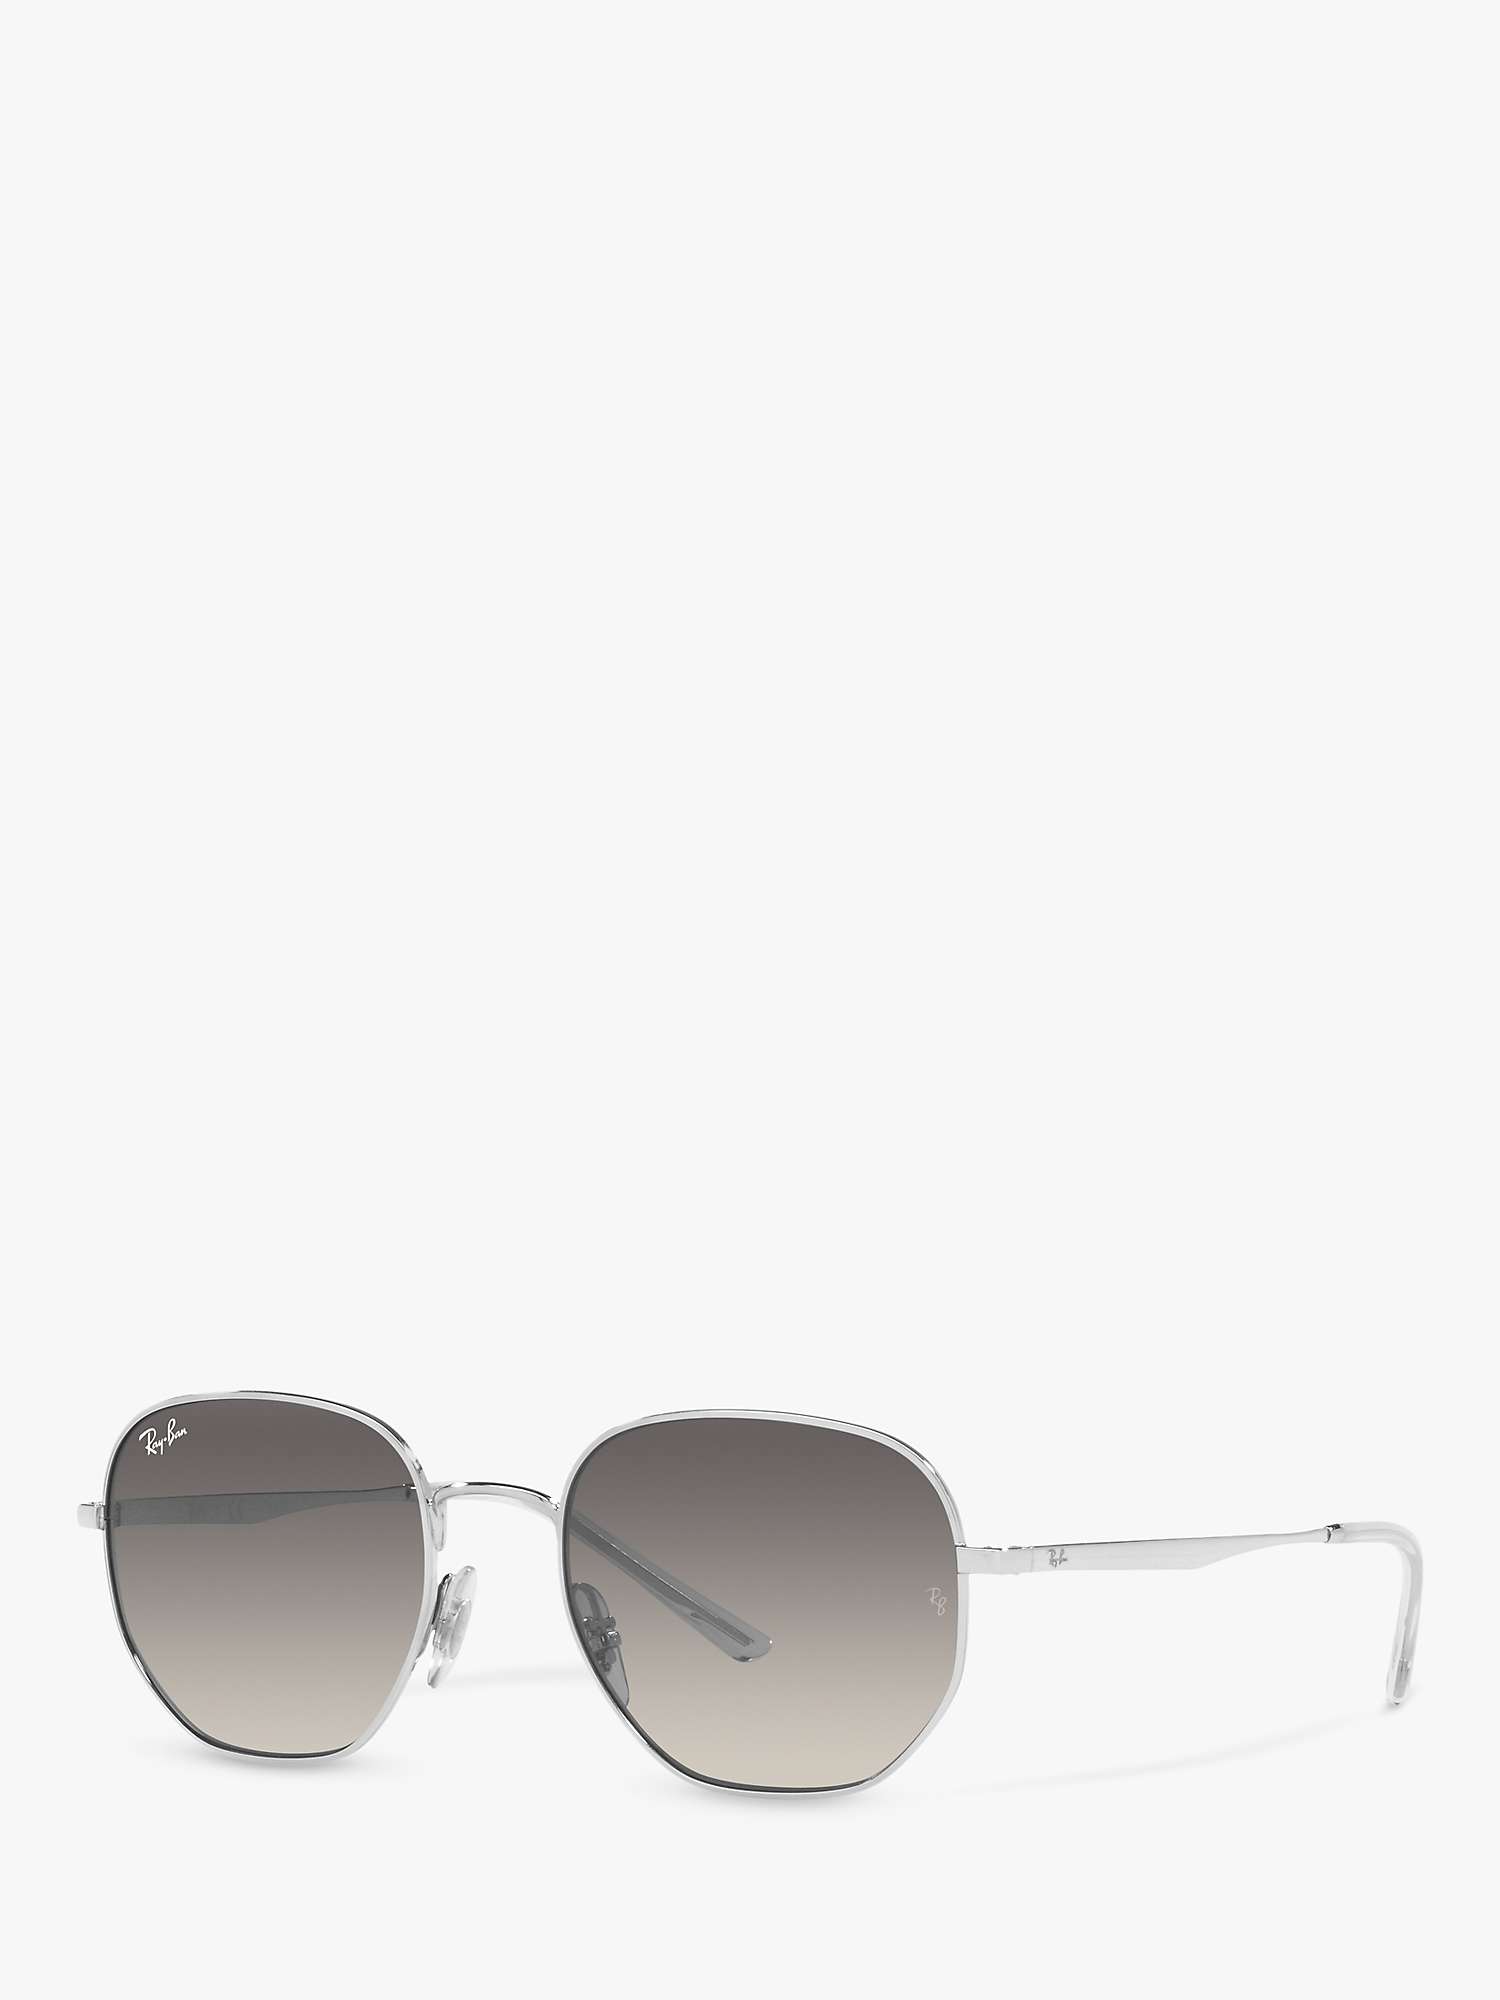 Buy Ray-Ban RB3682 Unisex Irregular Sunglasses, Silver Shine/Grey Gradient Online at johnlewis.com